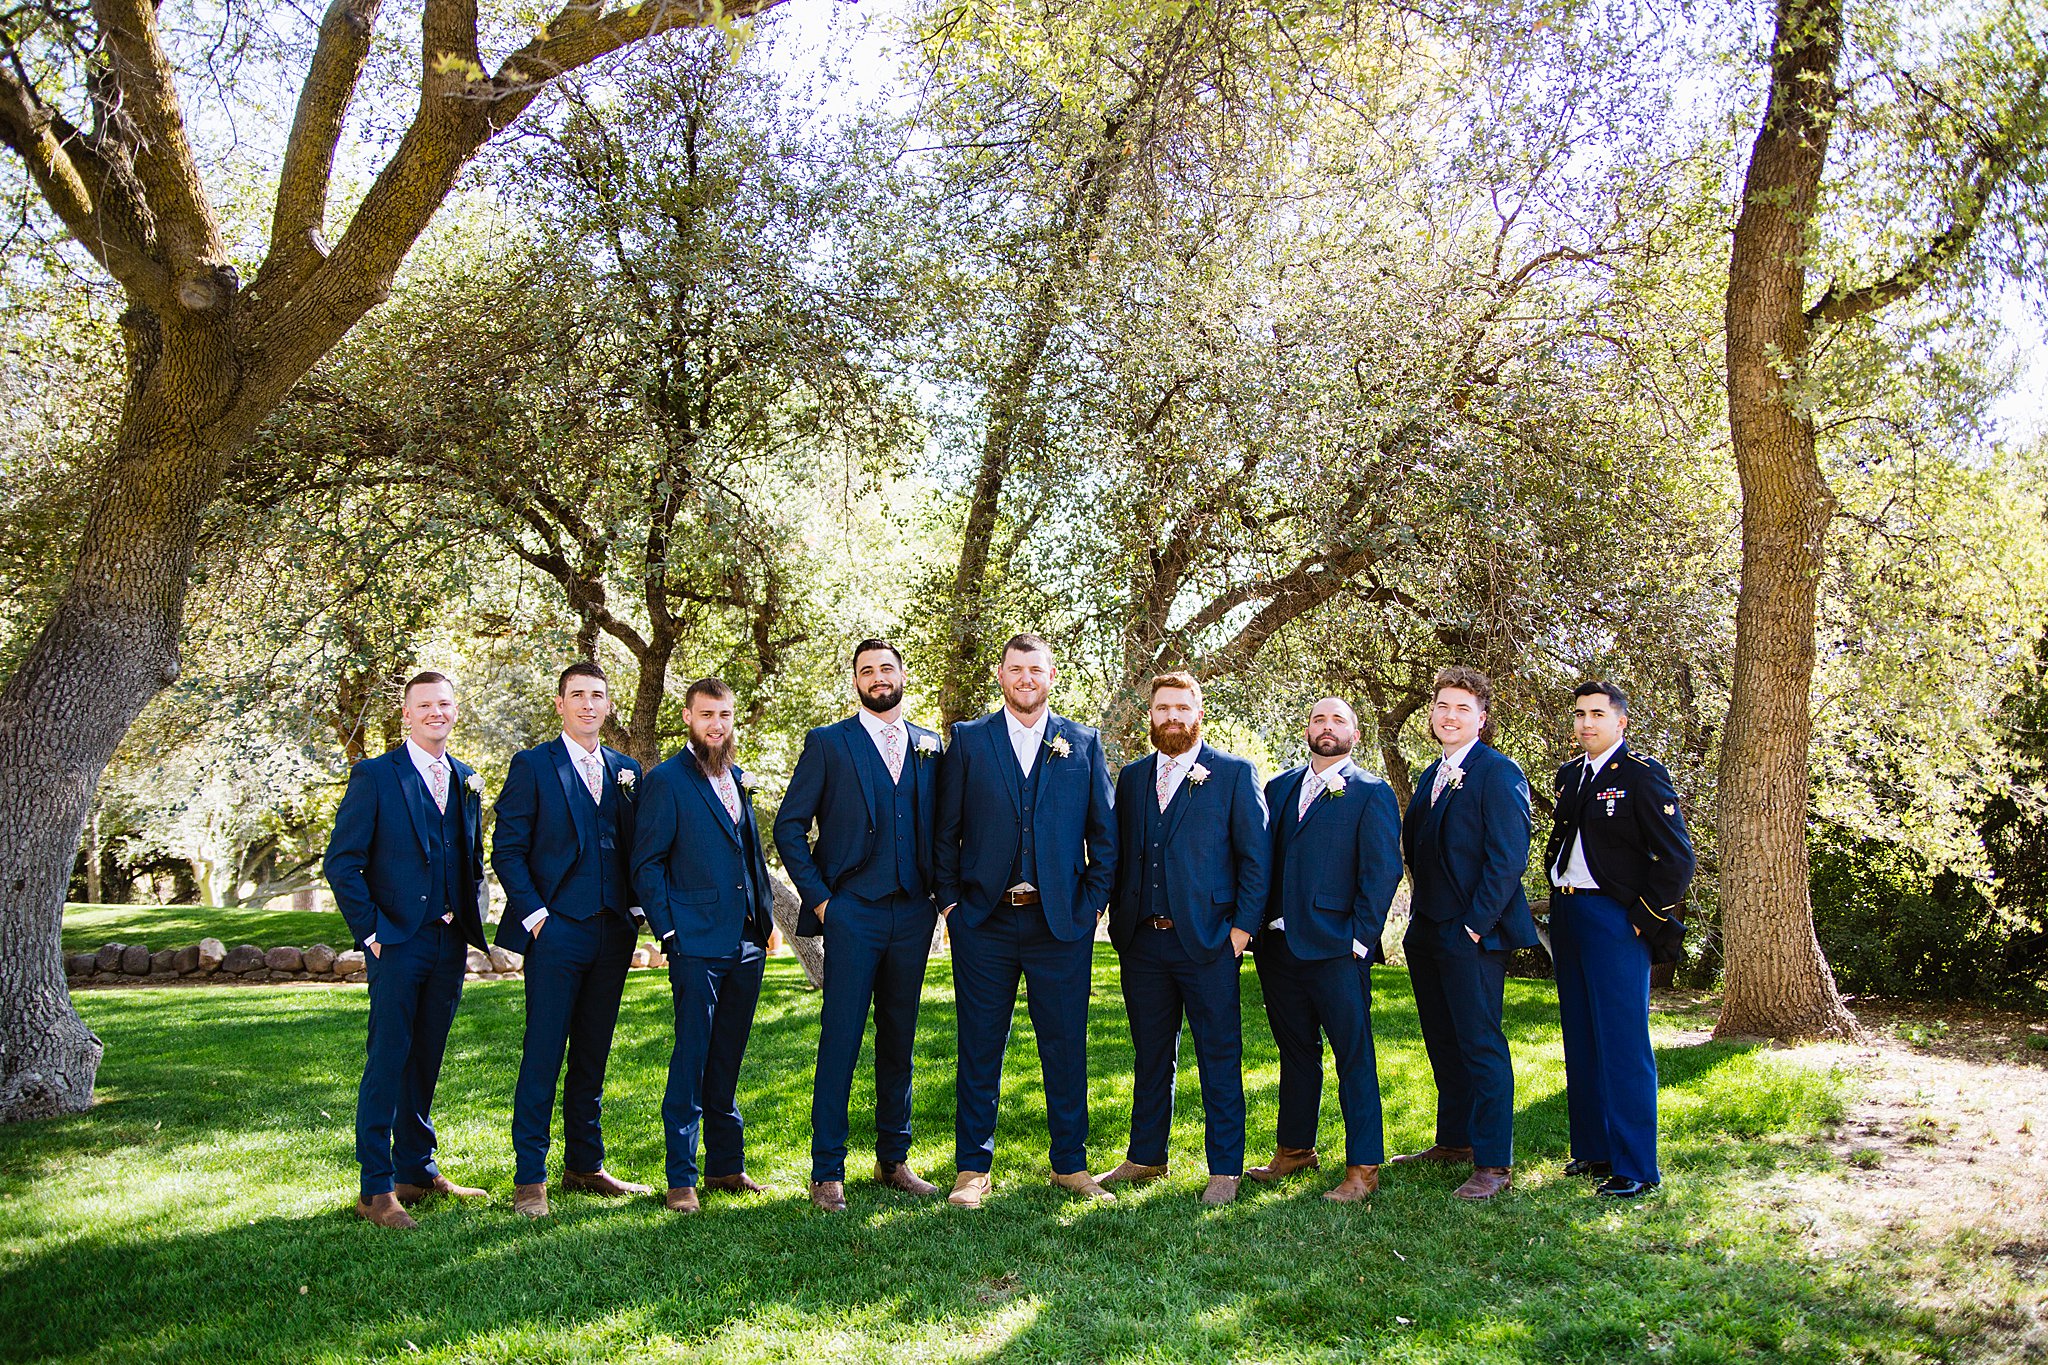 Groom and groomsmen together at a Van Dickson Ranch wedding by Arizona wedding photographer PMA Photography.